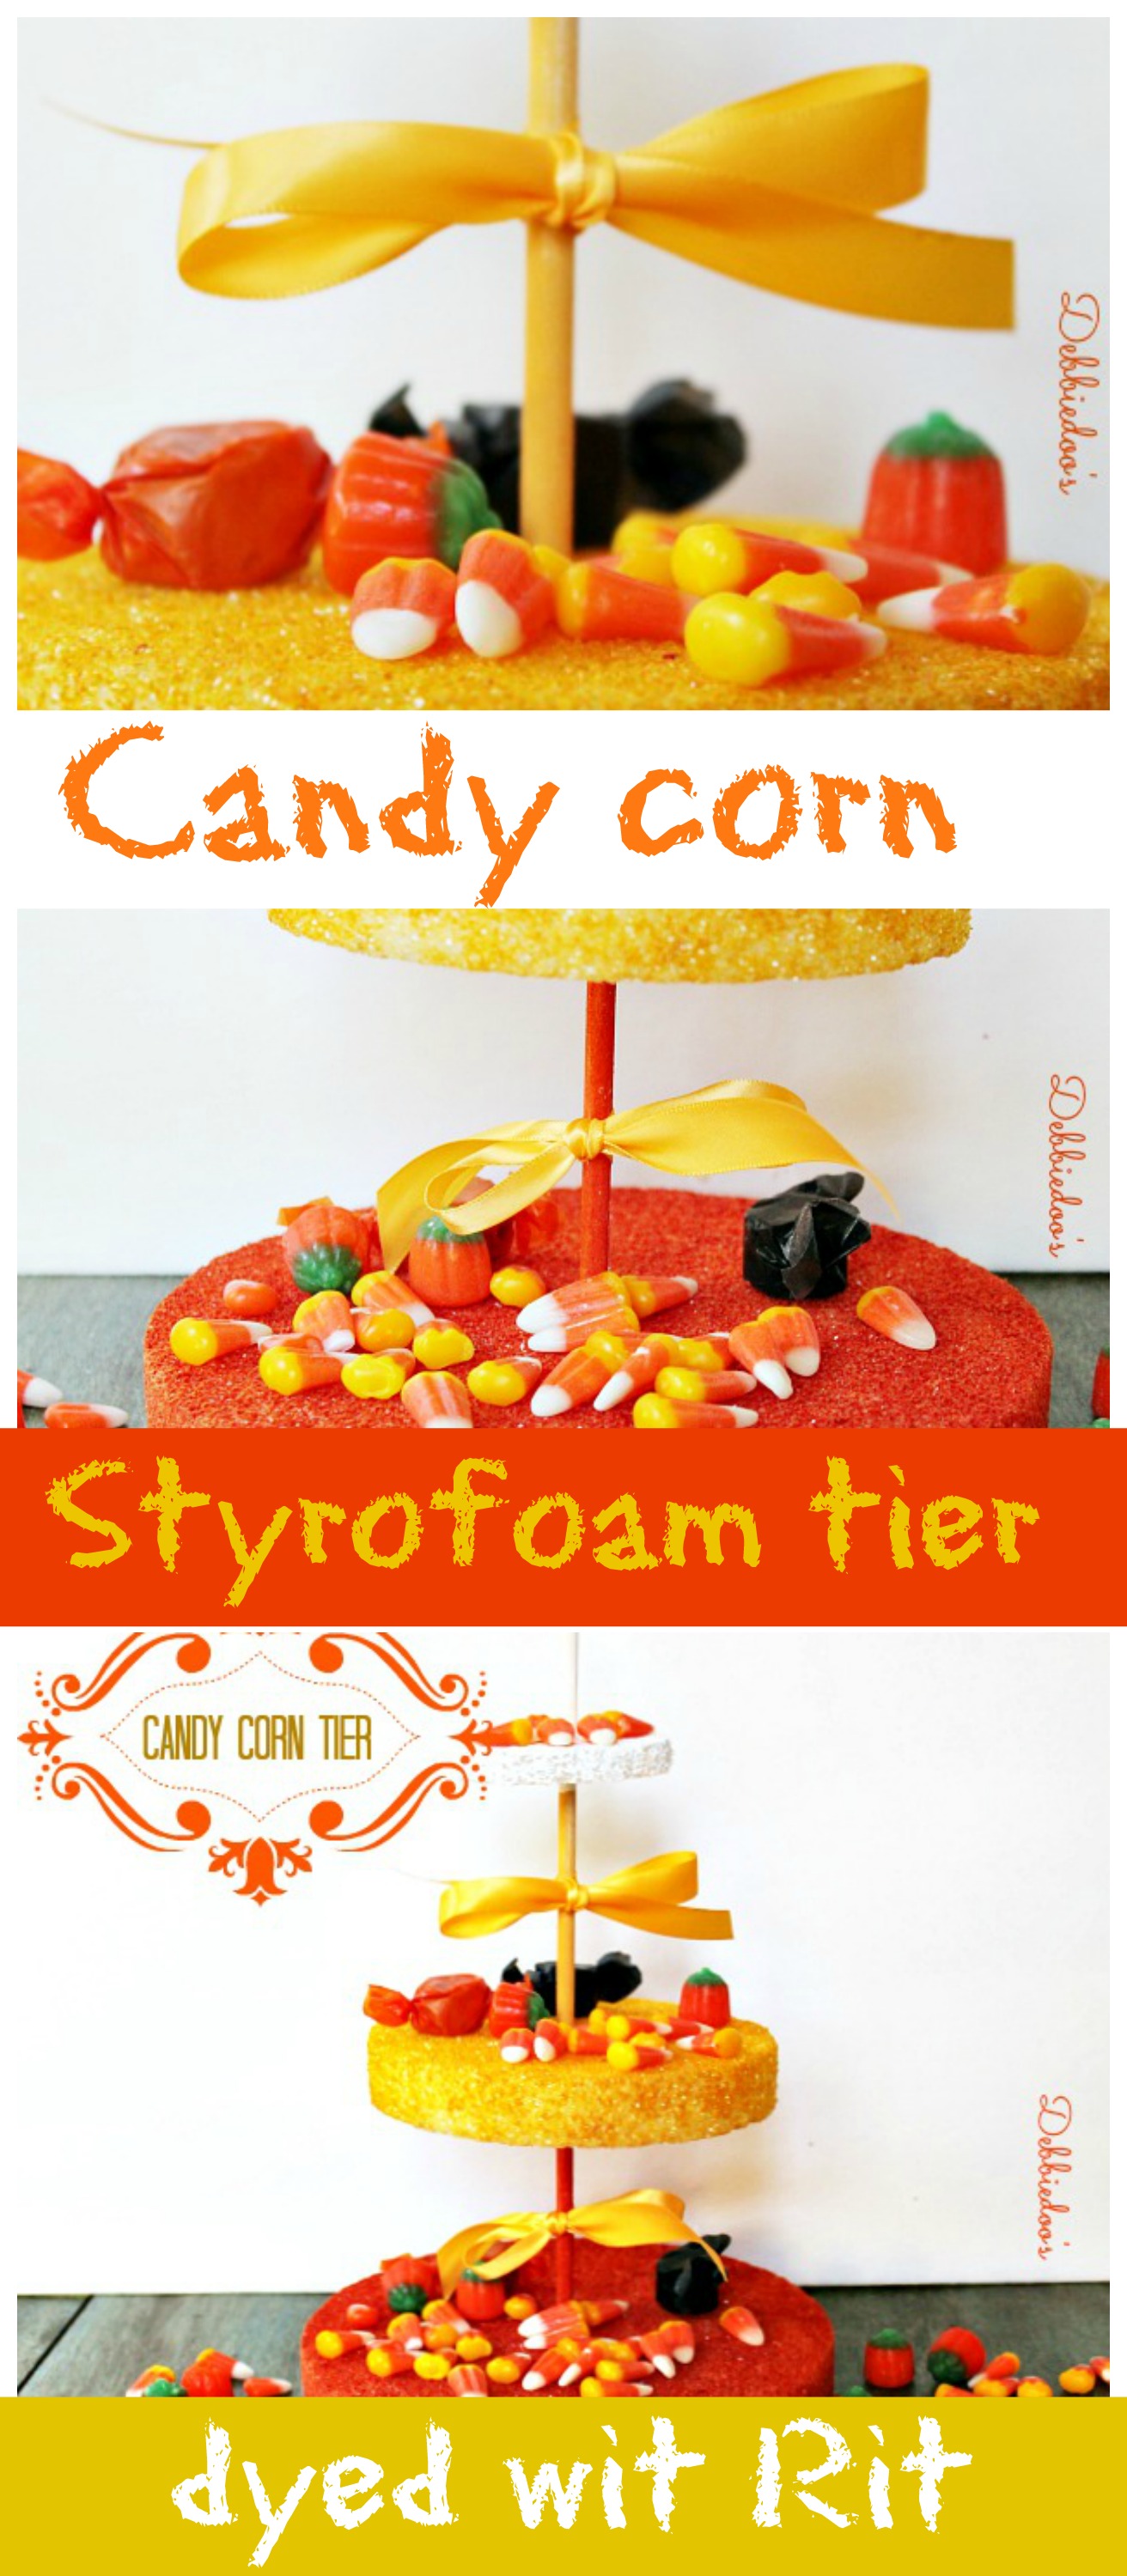 candy corn tier